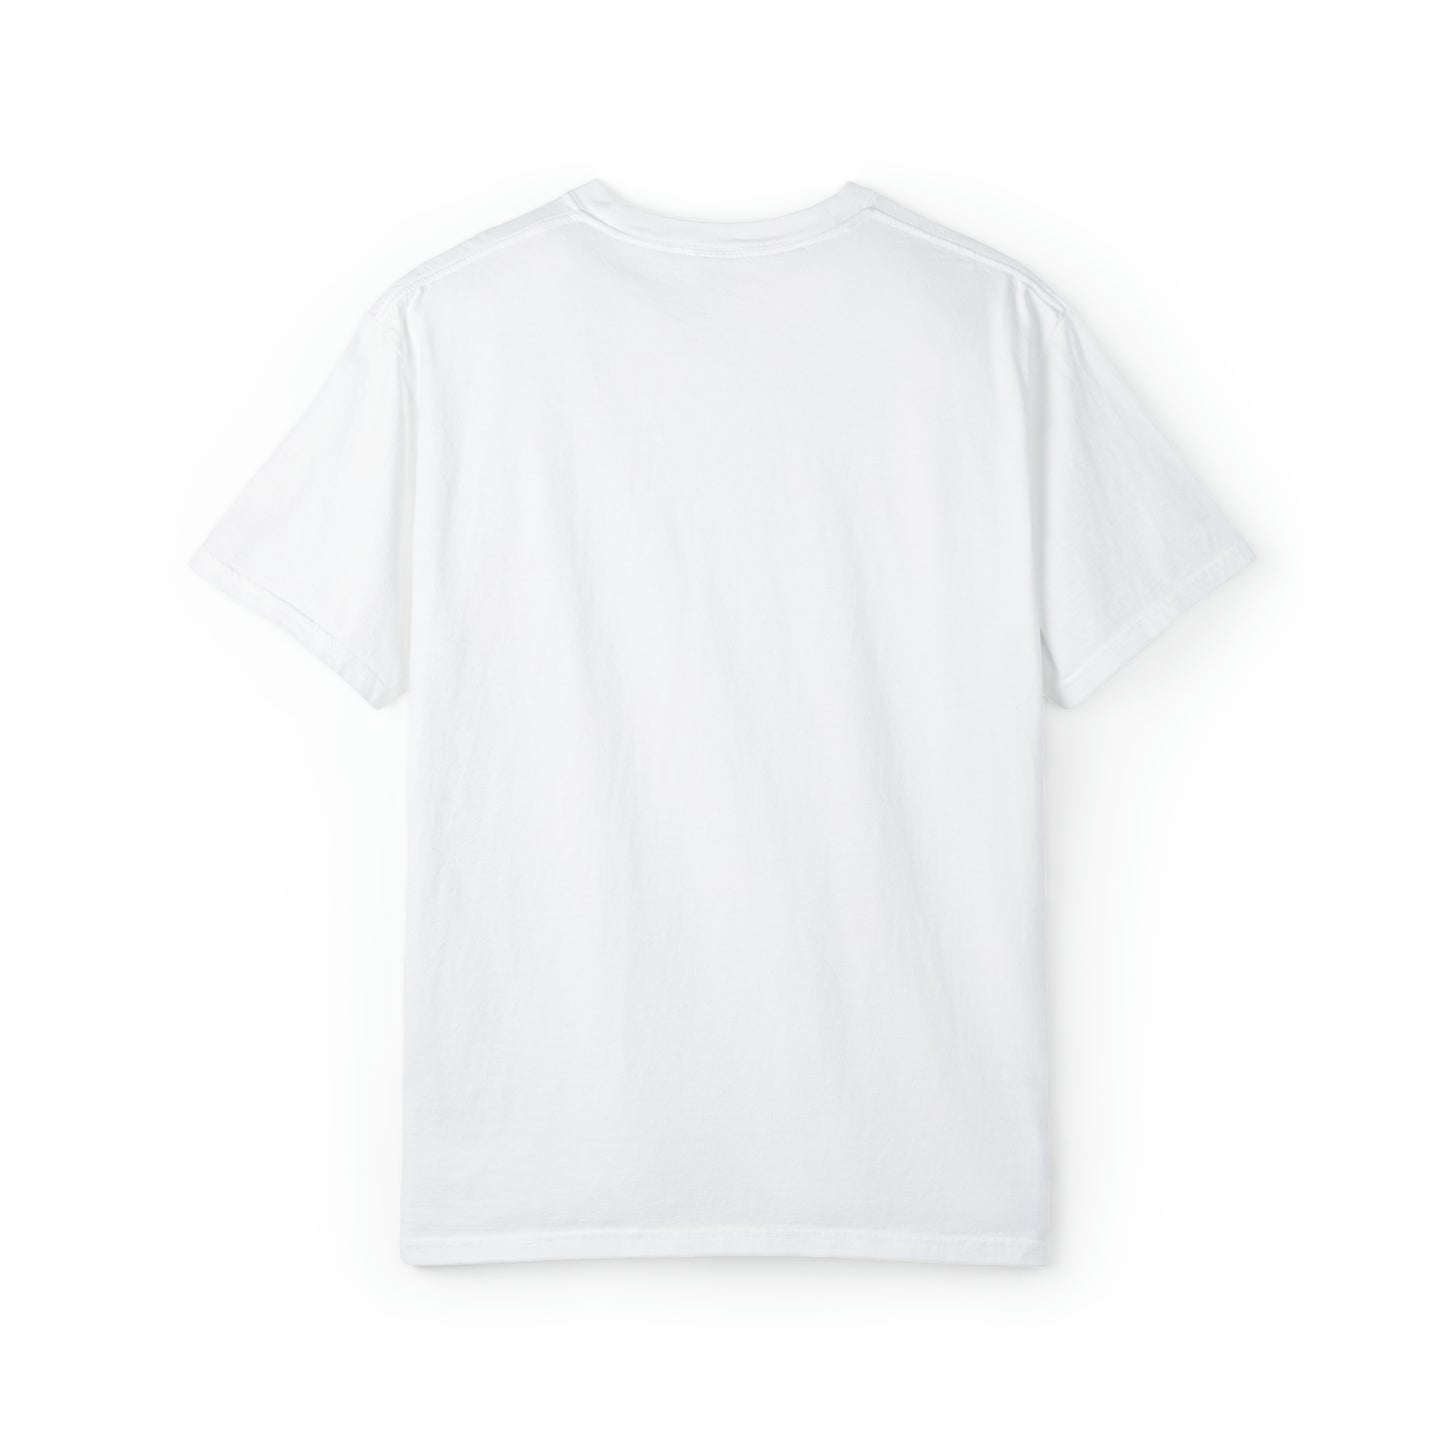 SEASON'S GREETINGS TEE Unisex Garment-Dyed T-shirt